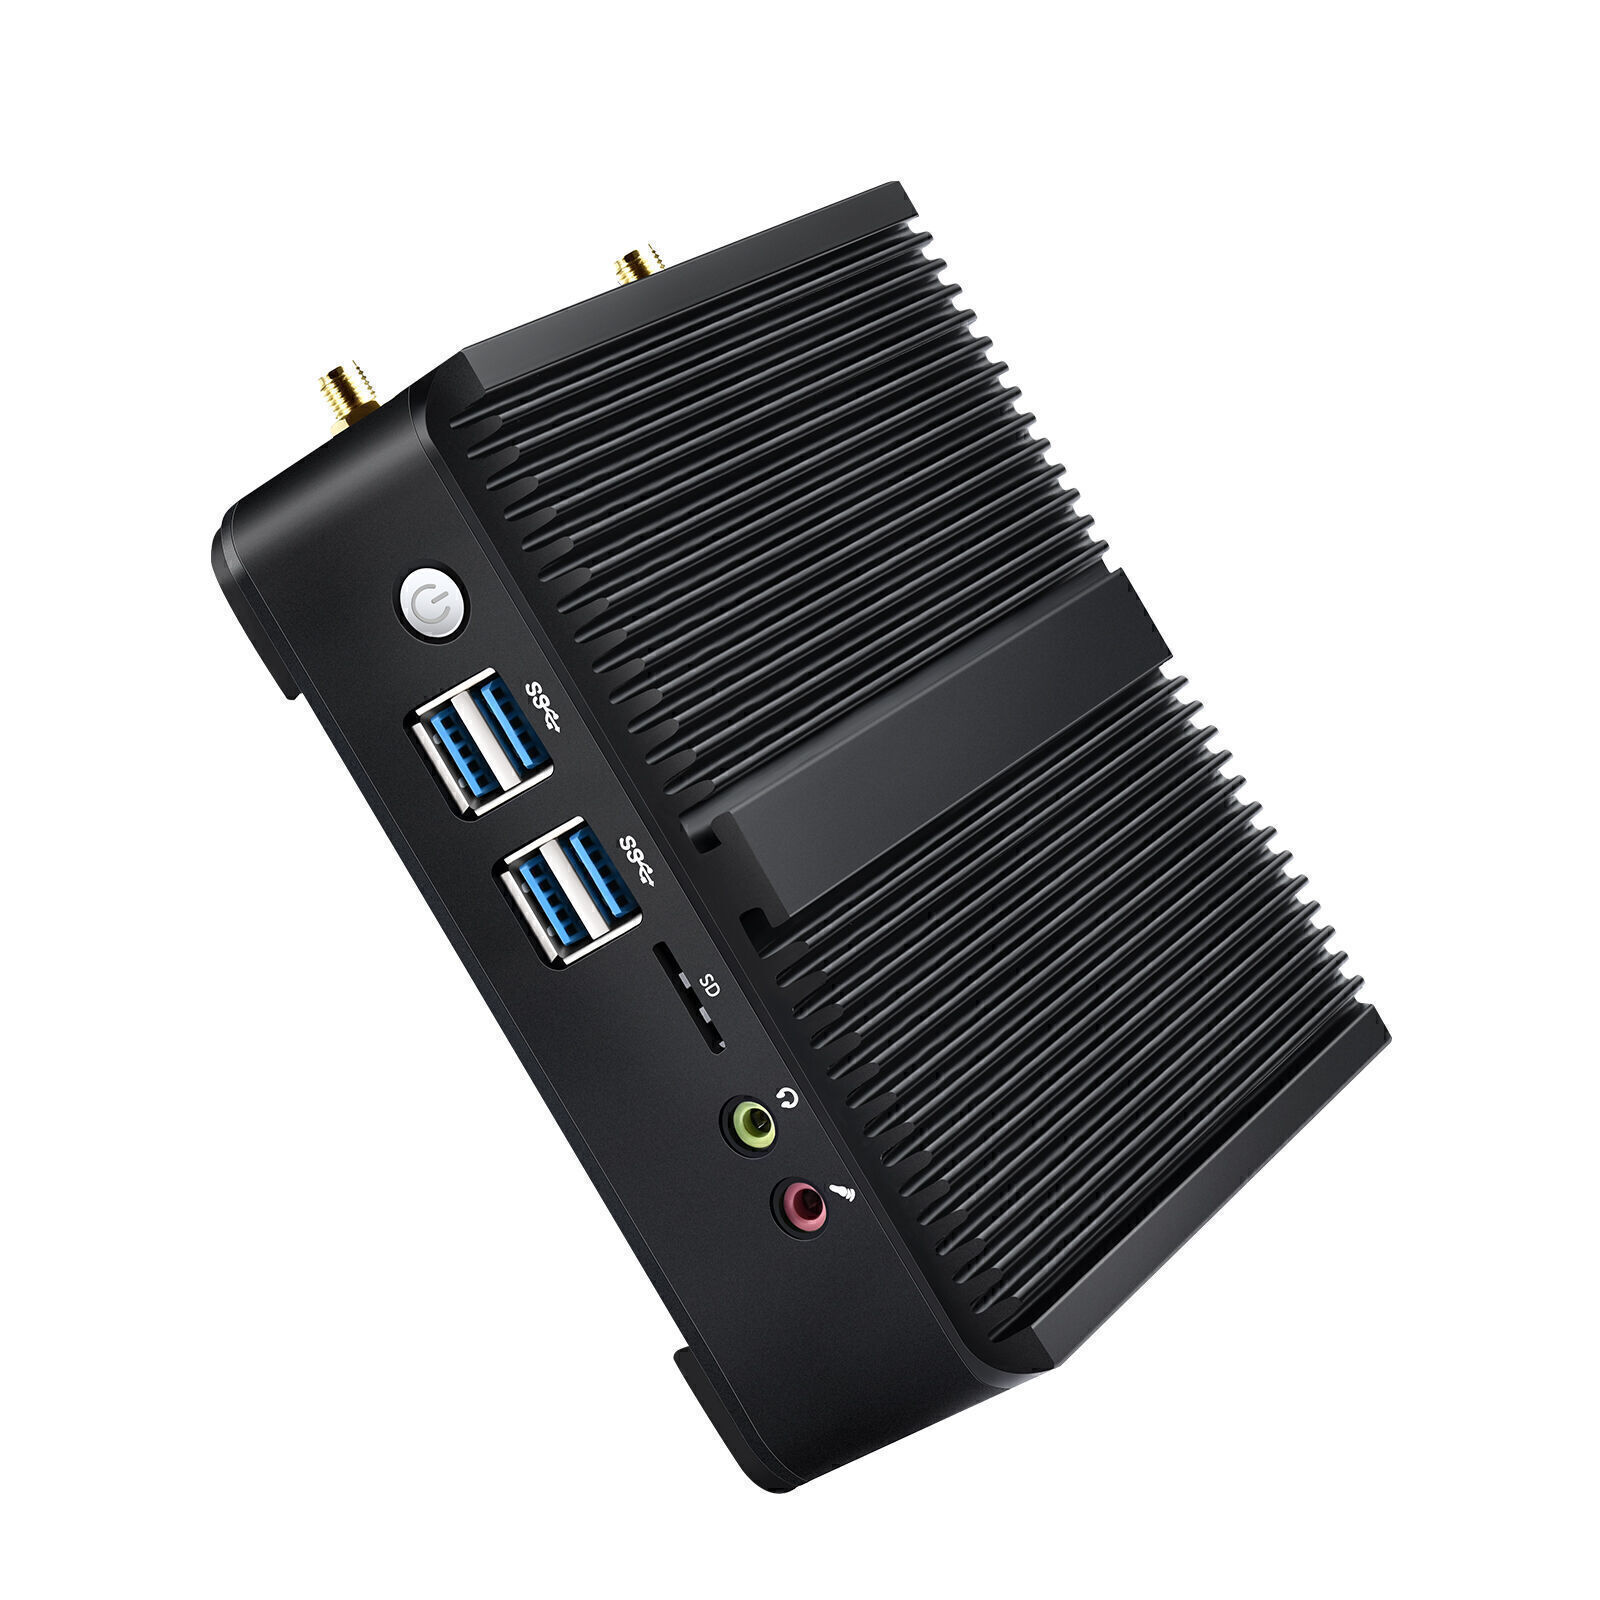 AC8-N-N100 : Ultra mini PC fanless ultra silencieux, très basse